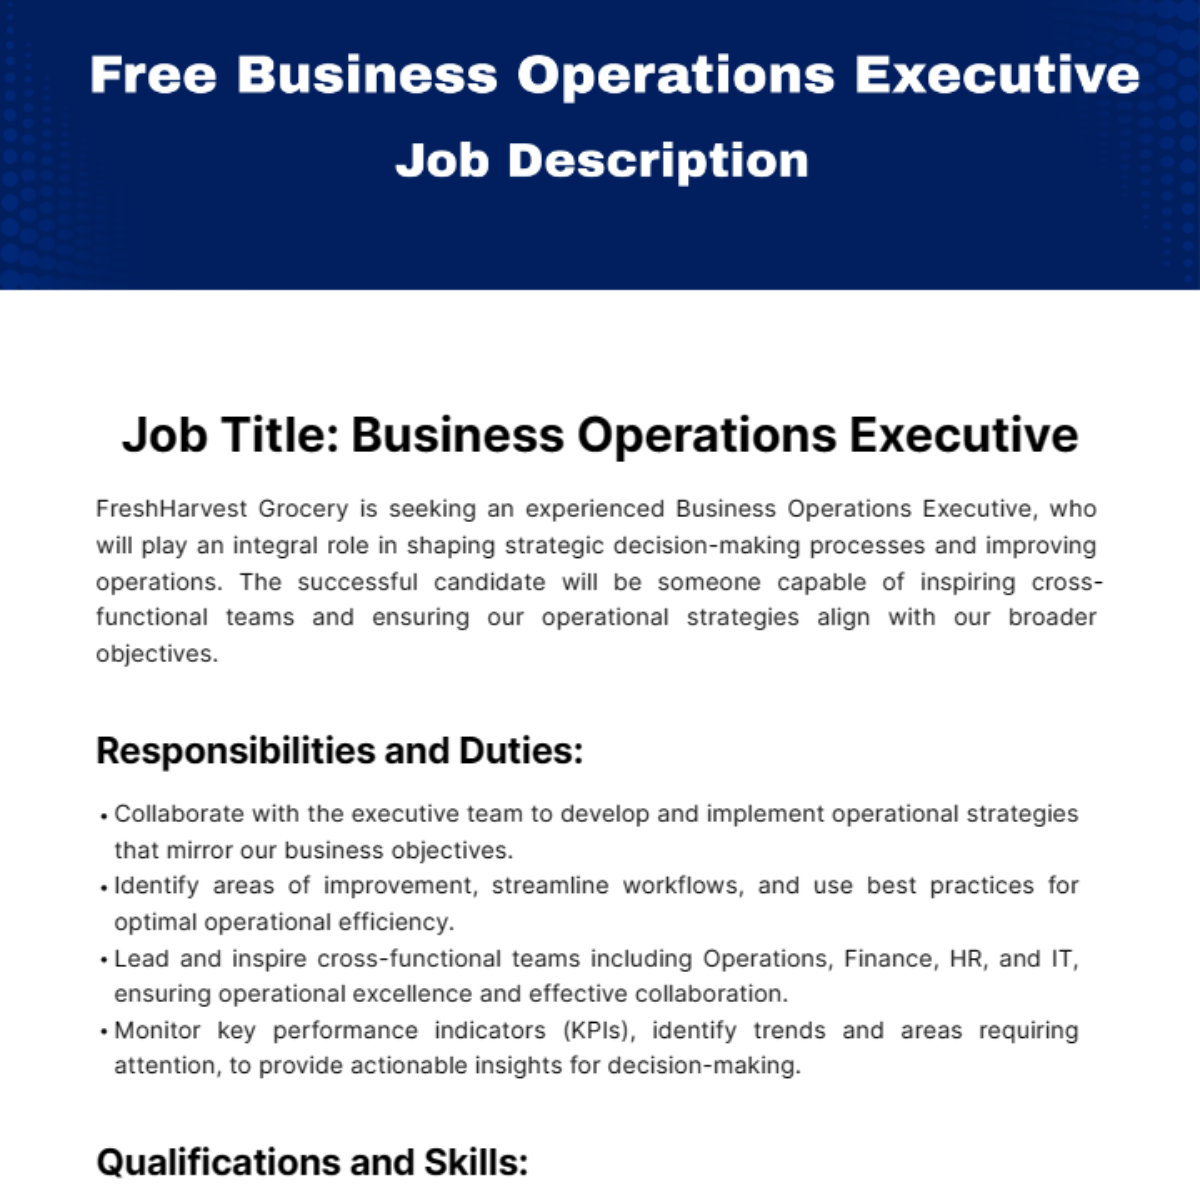 Free Business Operations Executive Job Description Template